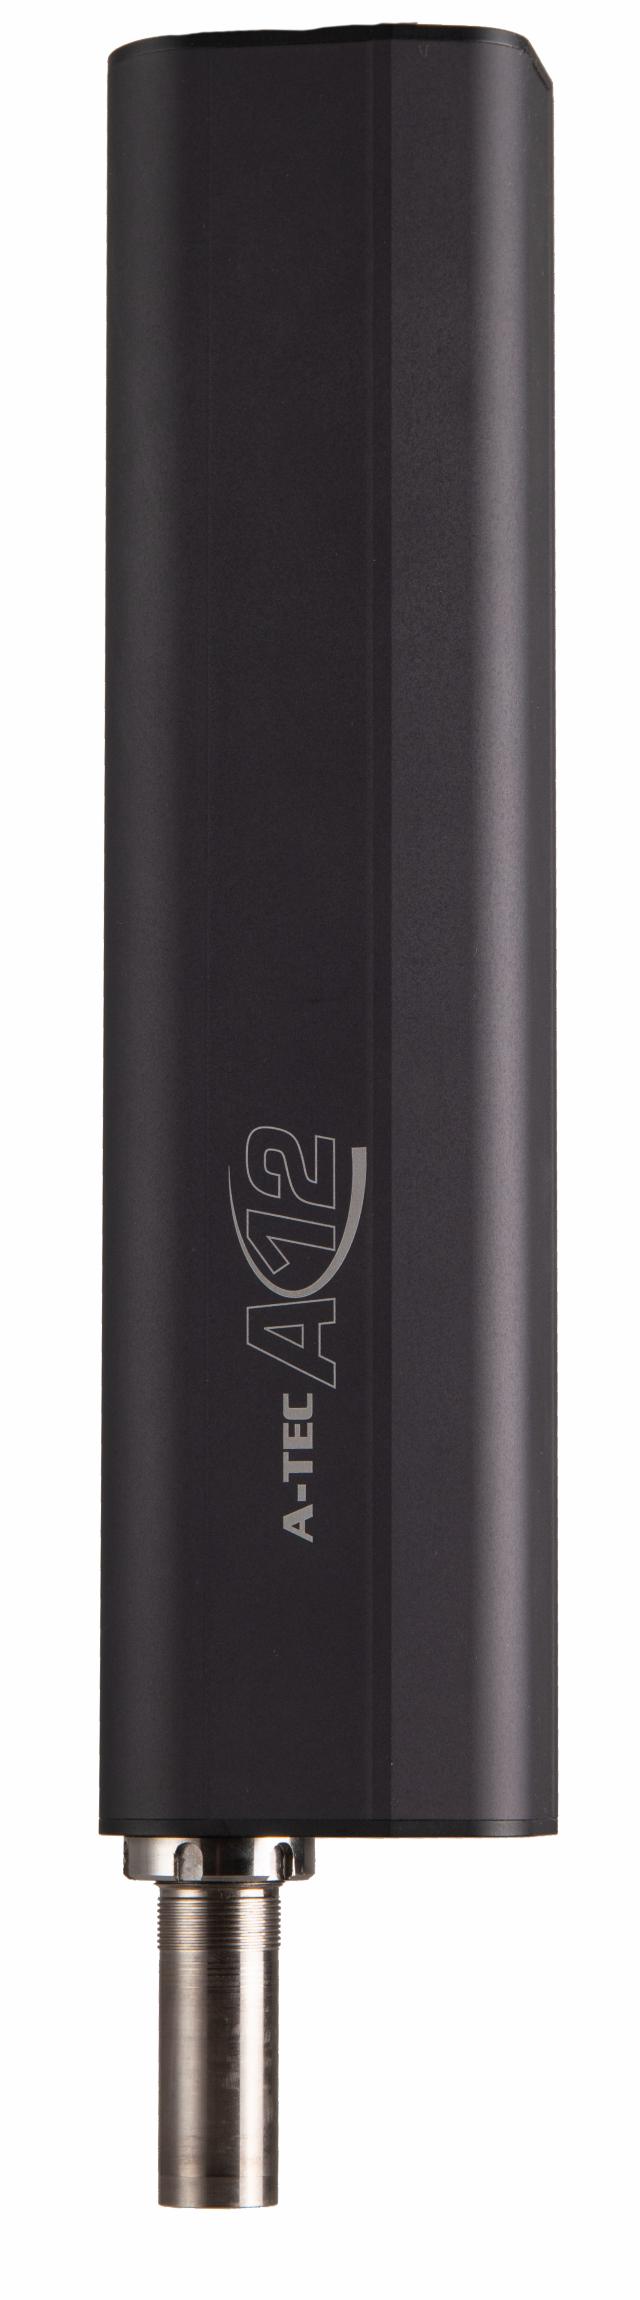 A-Tec A12 Choke adapter